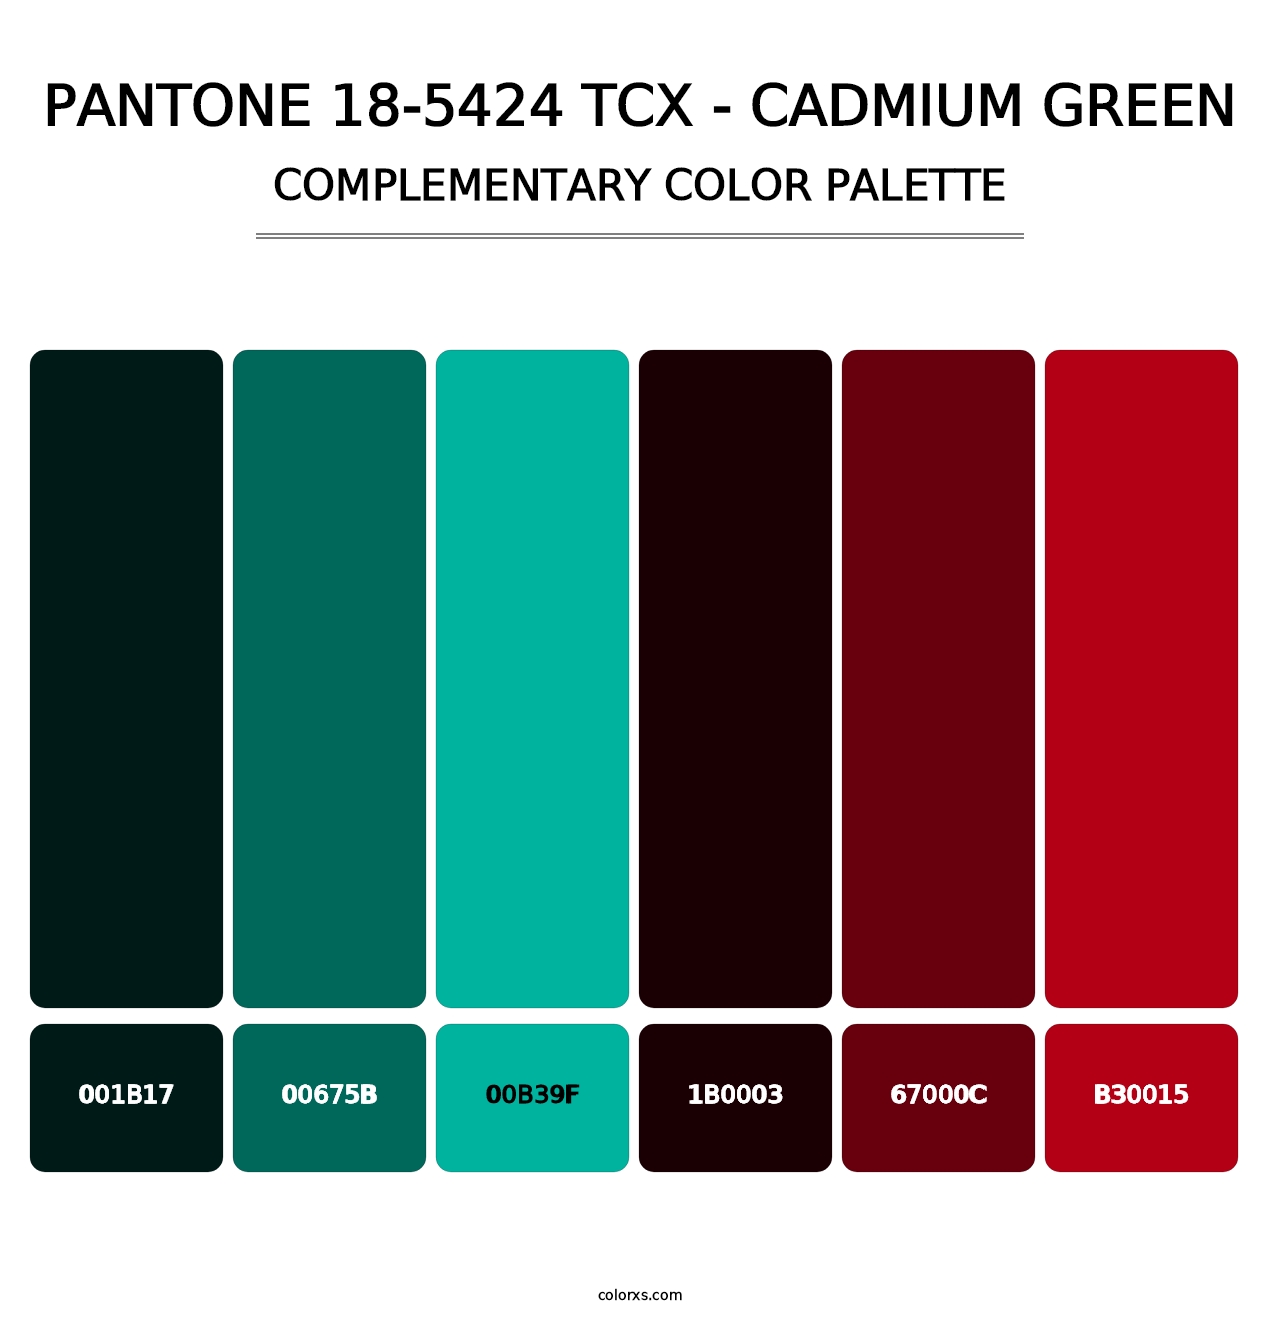 PANTONE 18-5424 TCX - Cadmium Green - Complementary Color Palette